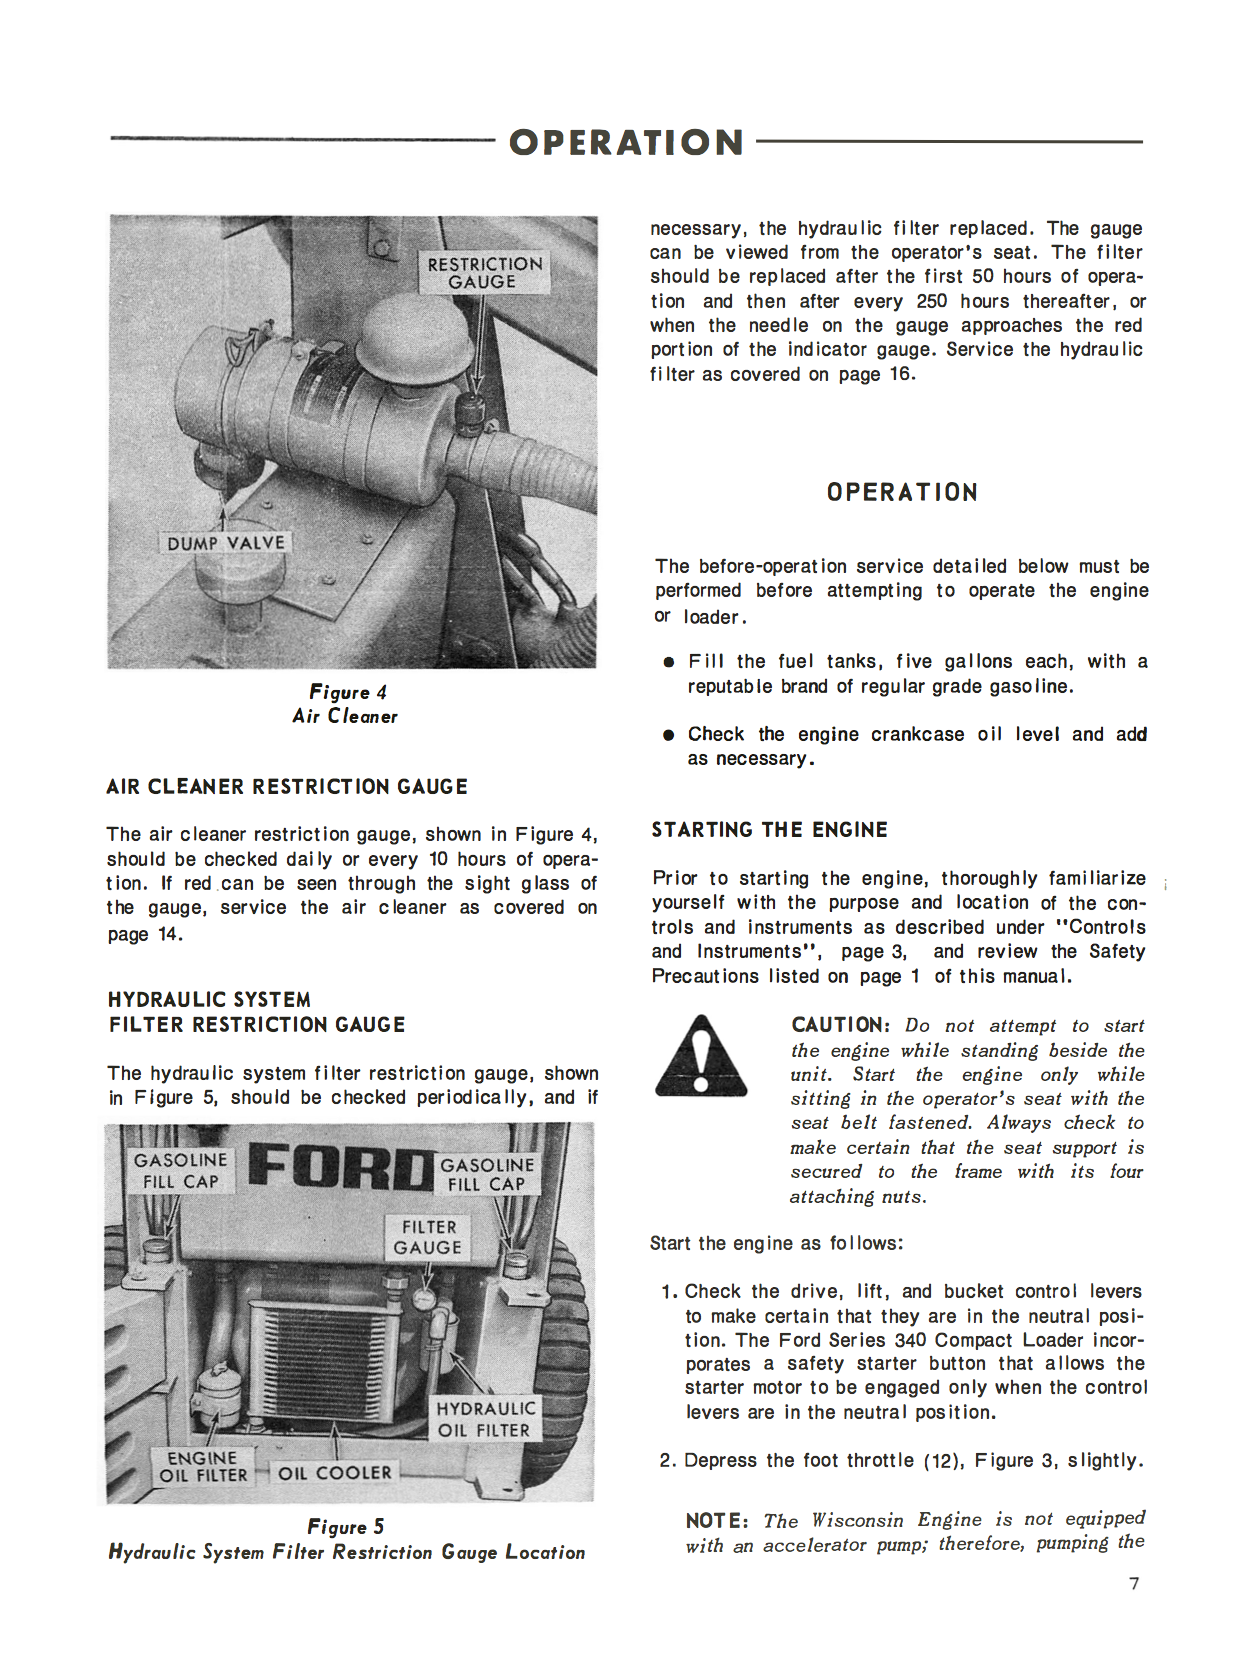 Ford 340 Compact Loader - Operator's Manual - Ag Manuals - A Provider of Digital Farm Manuals - 2